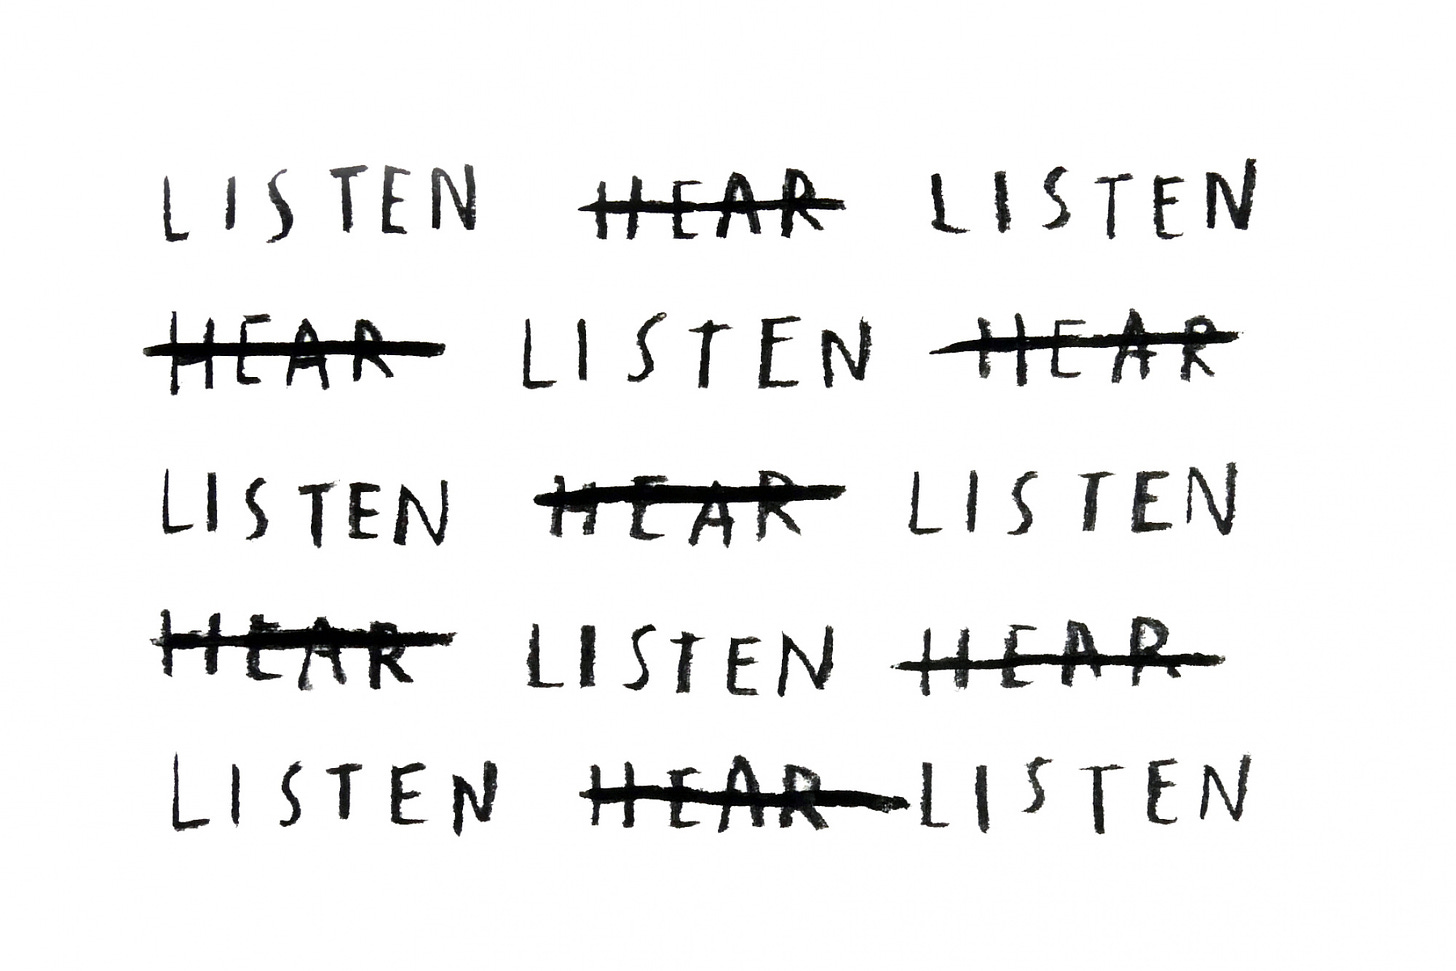 Christine Sun Kim's artwork "Listen Hear Listen".